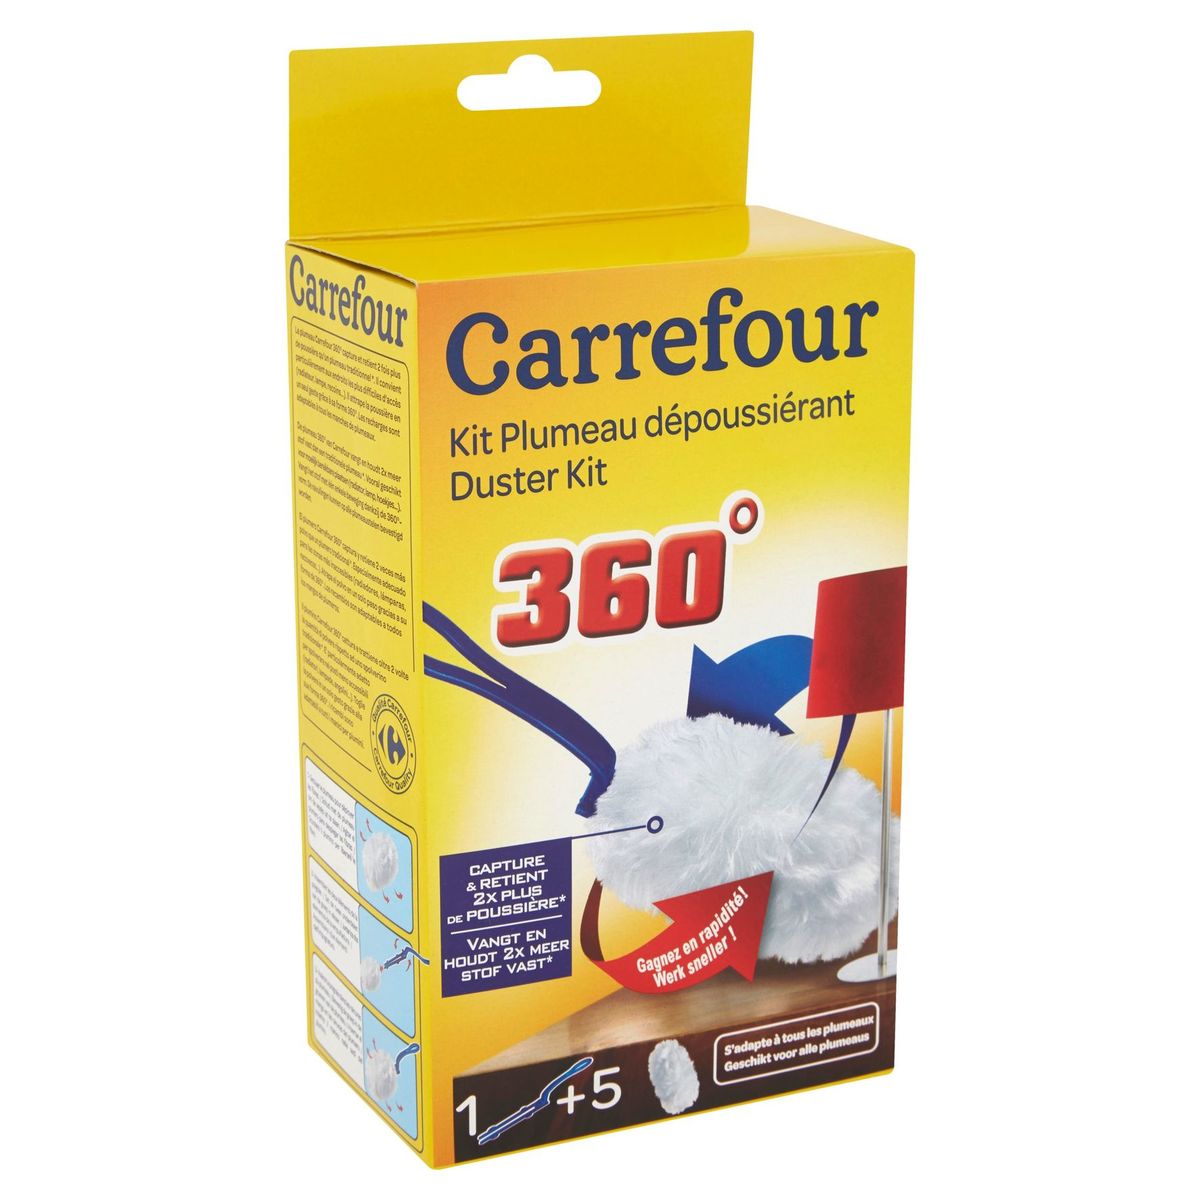 Carrefour Duster Kit 360°